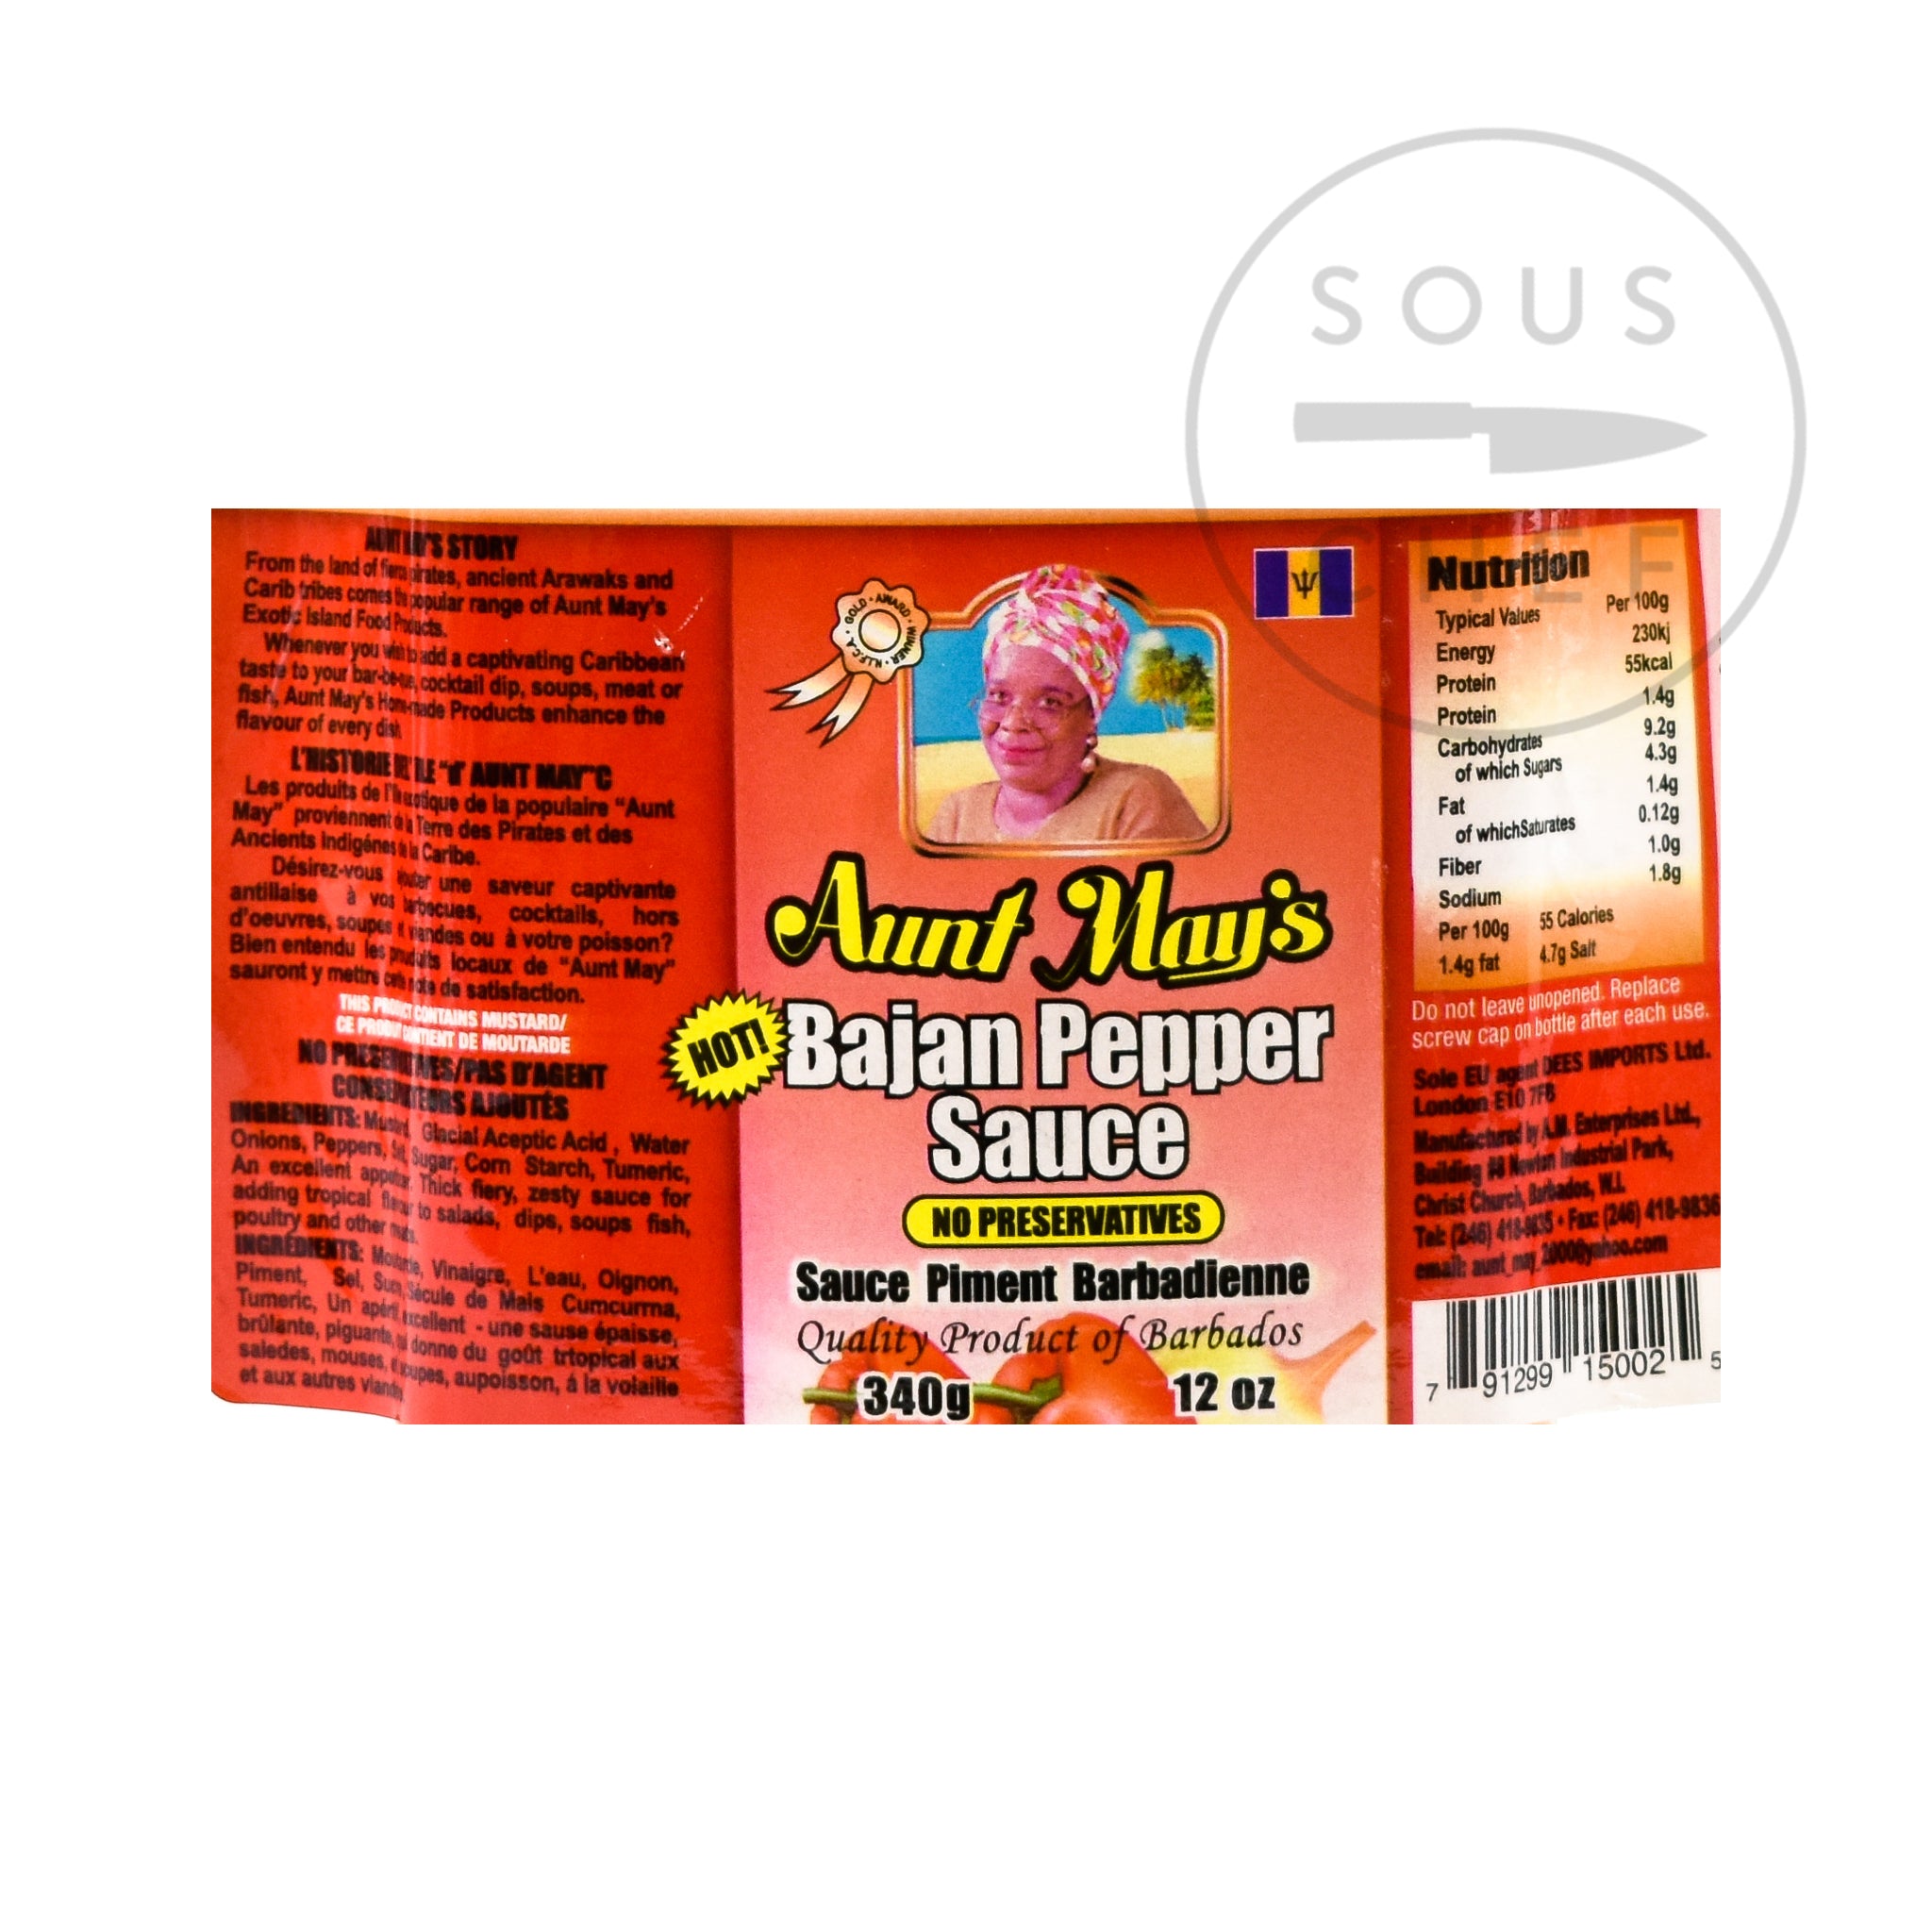 Aunt May's Bajan Pepper Sauce 340g nutritional information ingredients